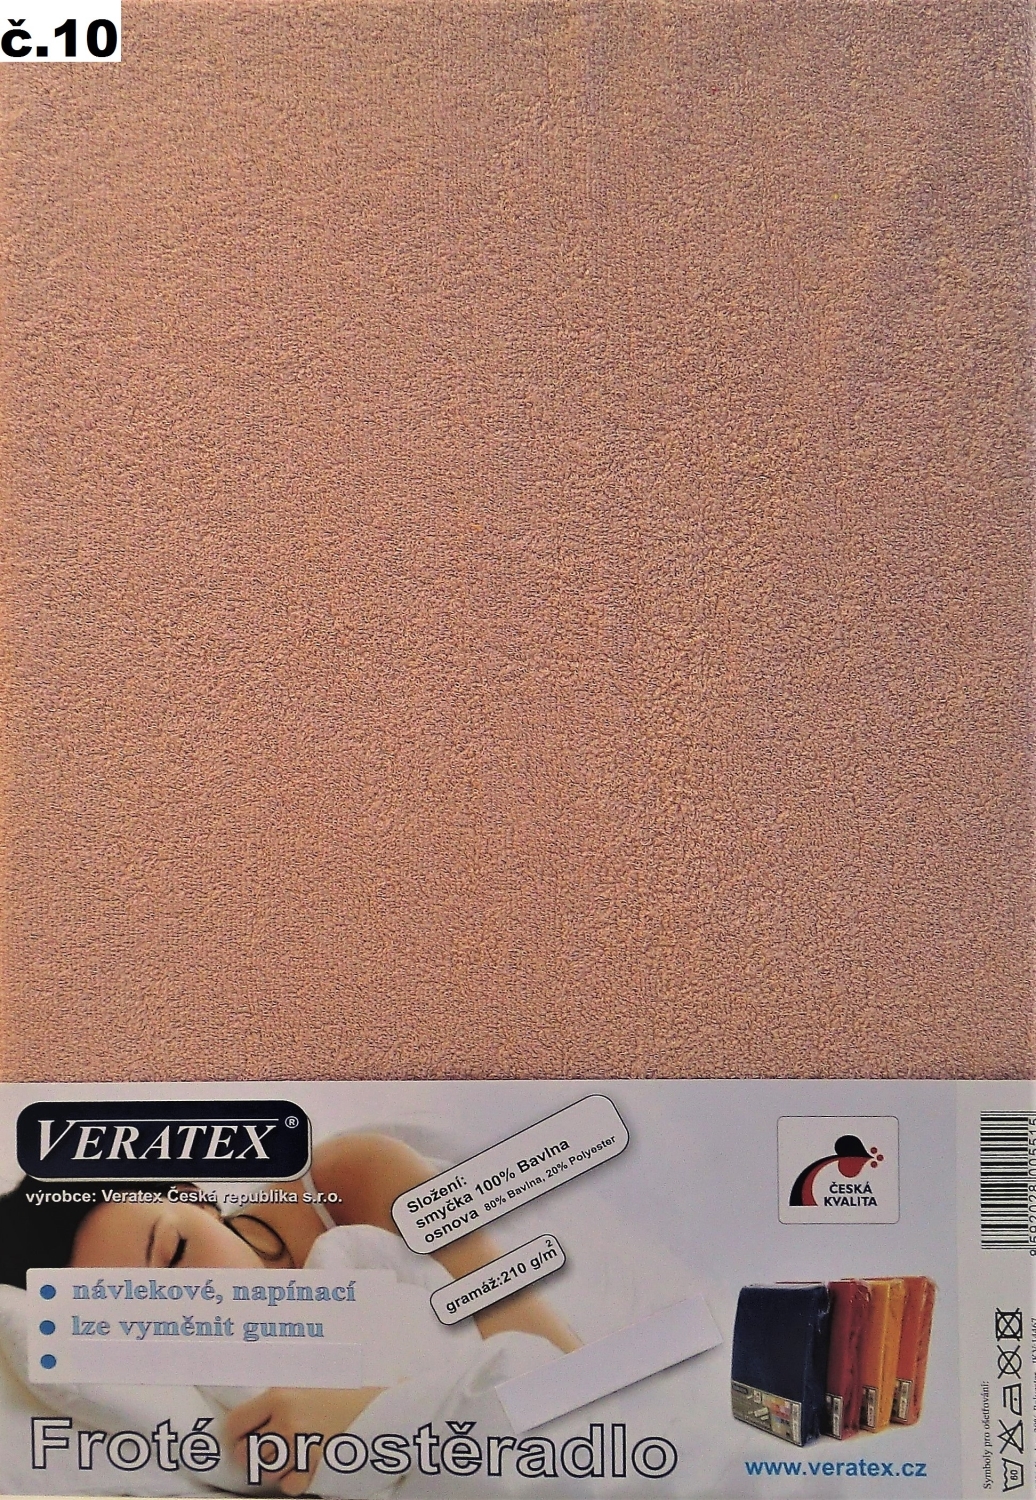 Veratex Froté prostěradlo jednolůžko 90x200/16 cm (starorůžová)